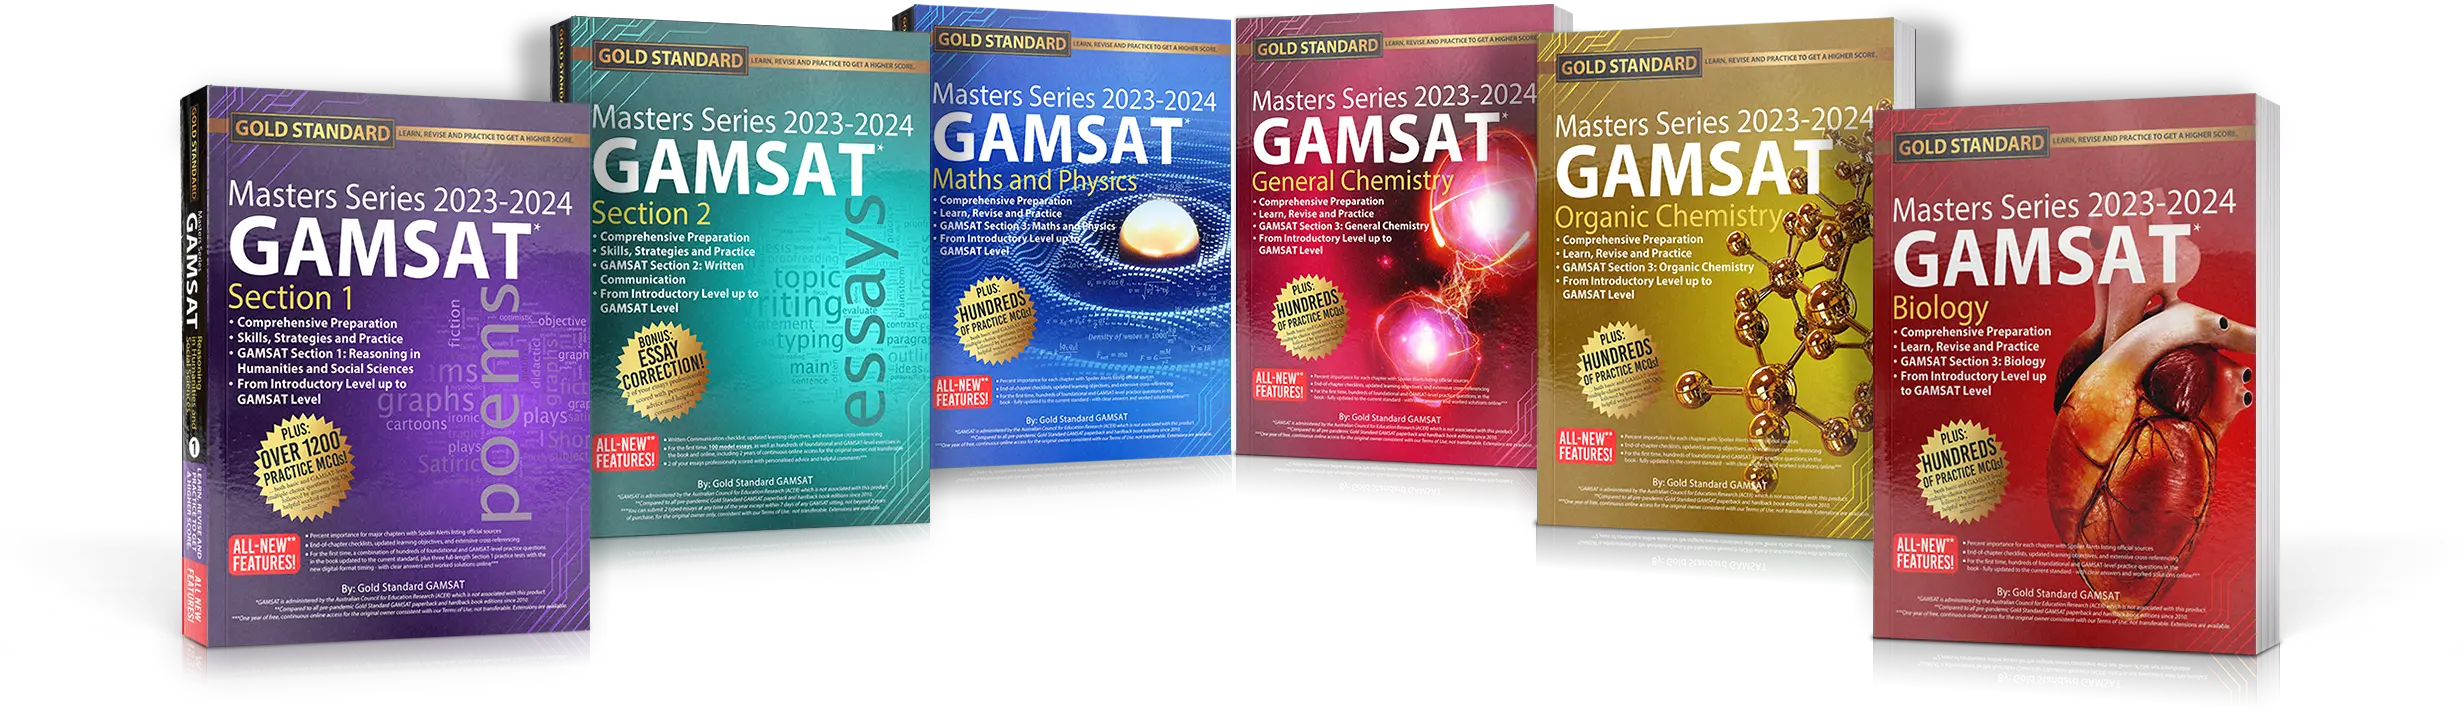 Gold Standard GAMSAT Preparation Textbooks